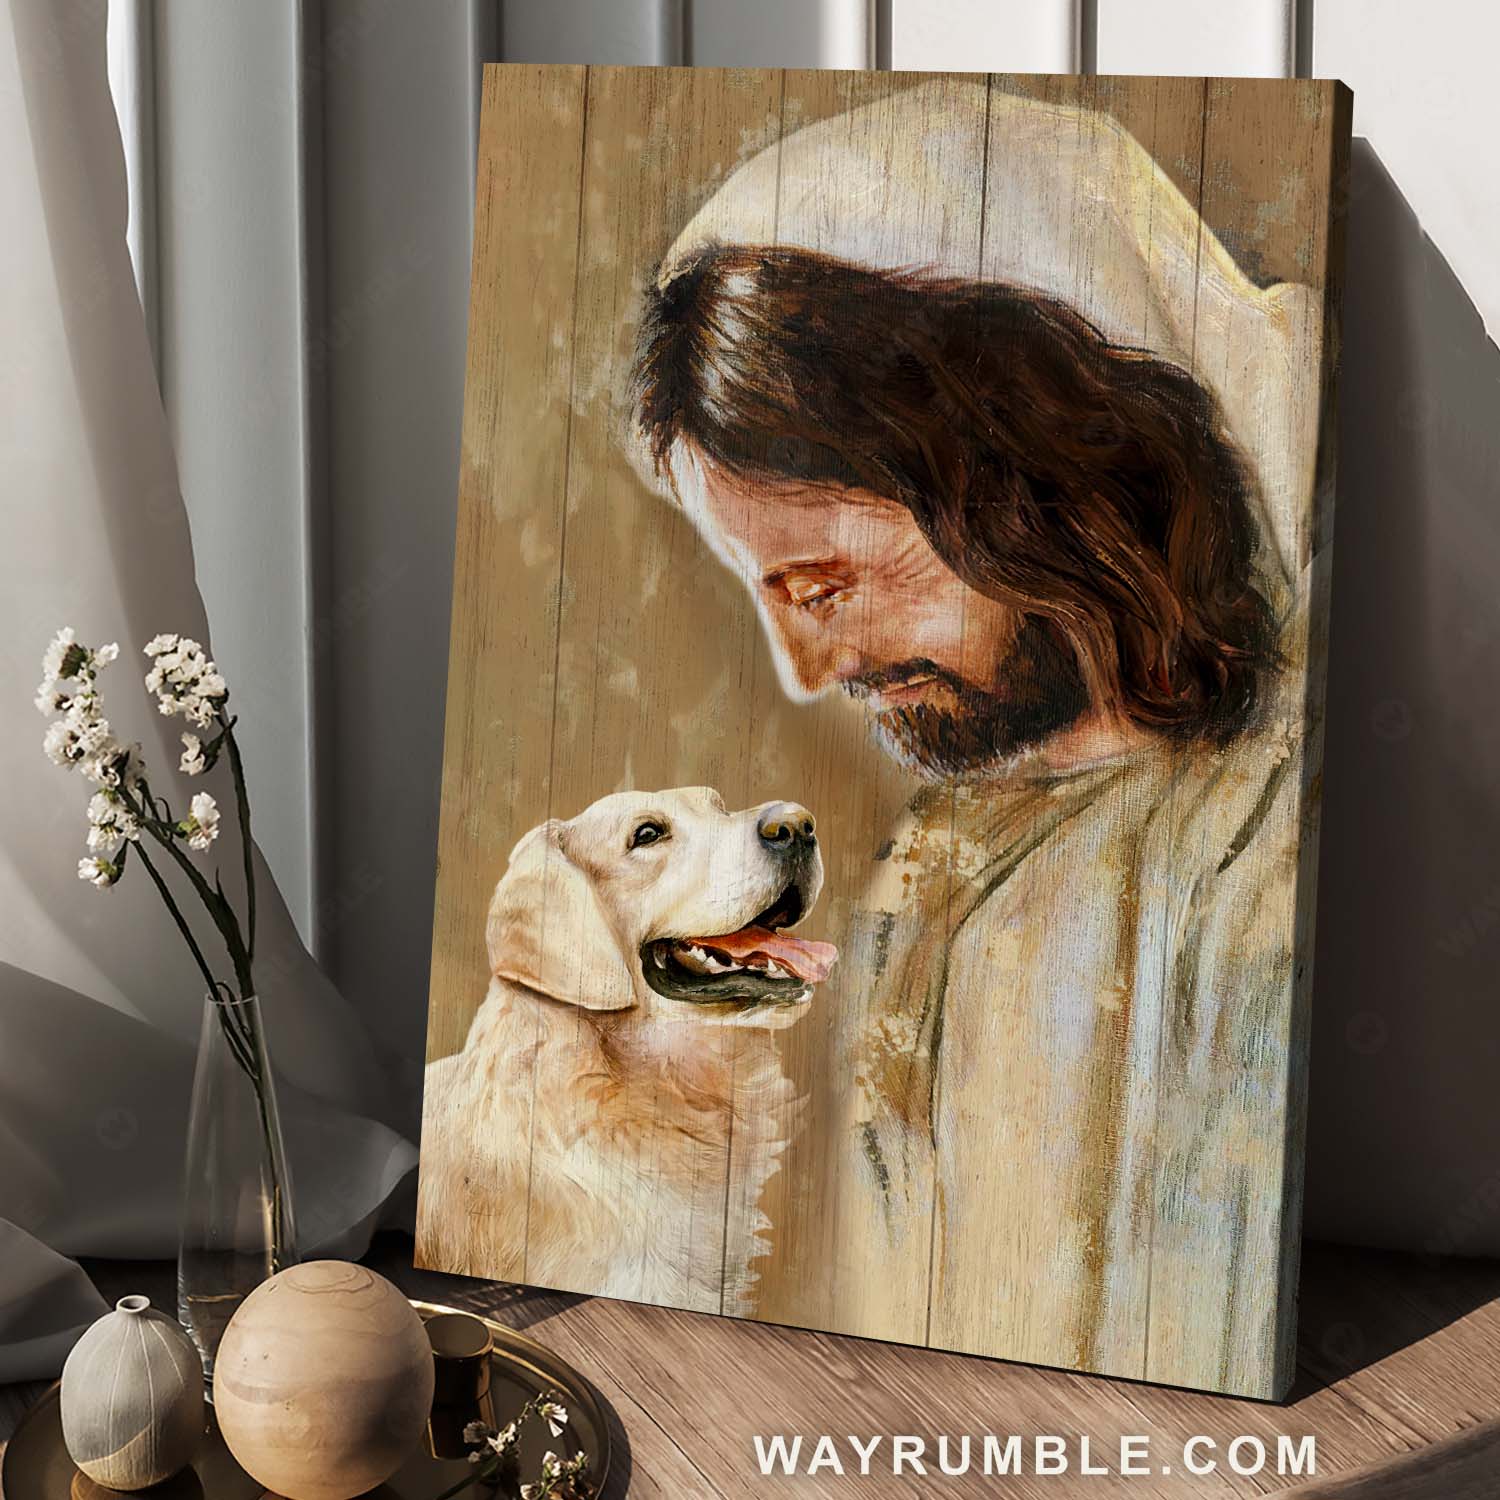 Golden Retriever, Cute dog, Vintage art, Beautiful Jesus painting - Jesus Portrait Canvas Prints, Christian Wall Art